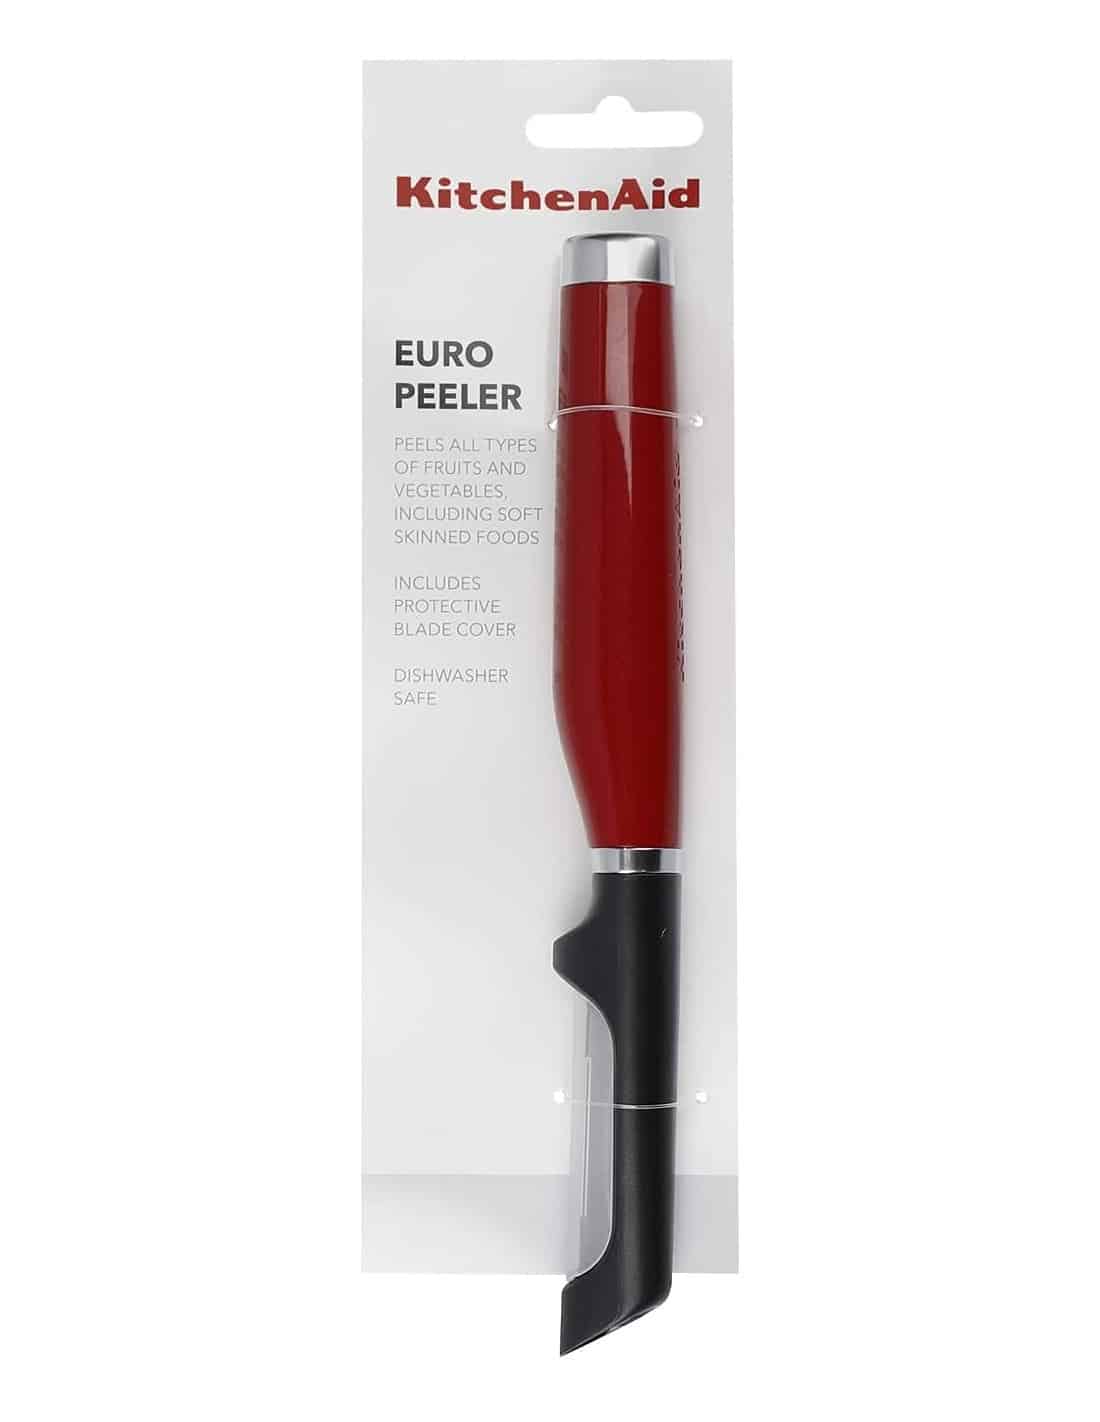 https://www.mimocook.com/30370-thickbox_default/kitchenaid-euro-peeler-stainless-steel-swivel-peeler.jpg